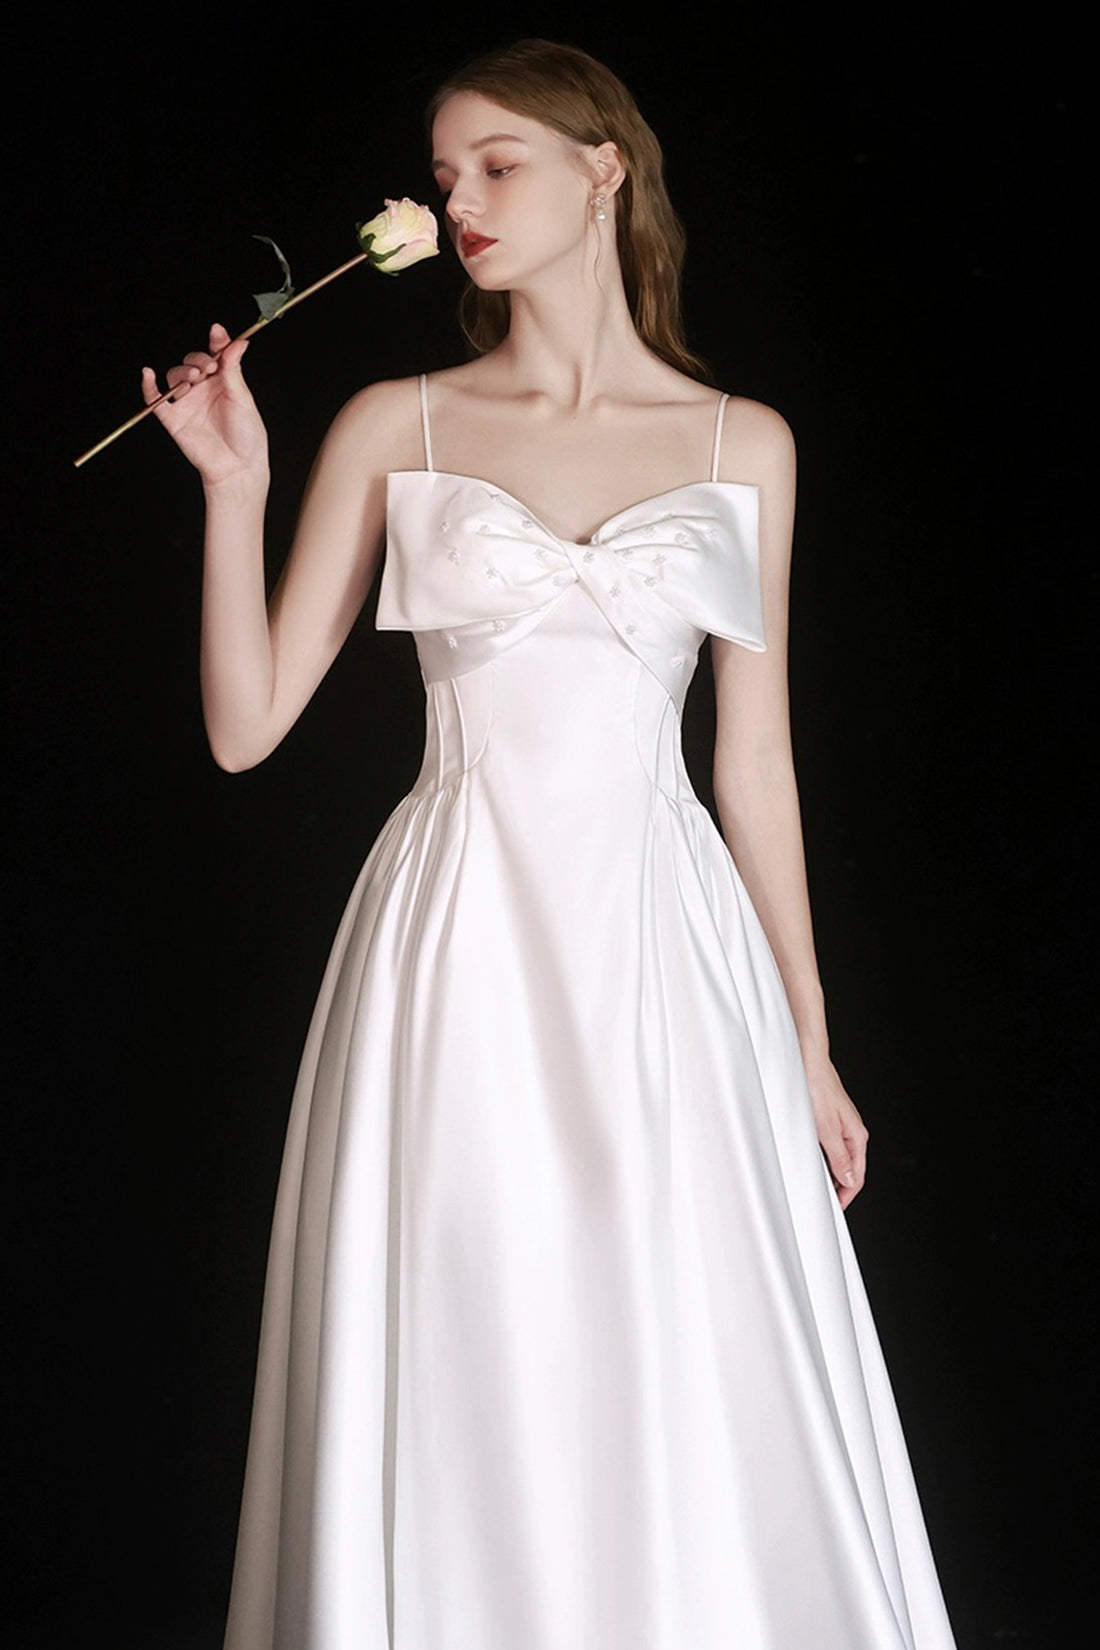 White Satin Tea Length Prom Dress, Lovely Spaghetti Strap A-Line Evening Party Dress